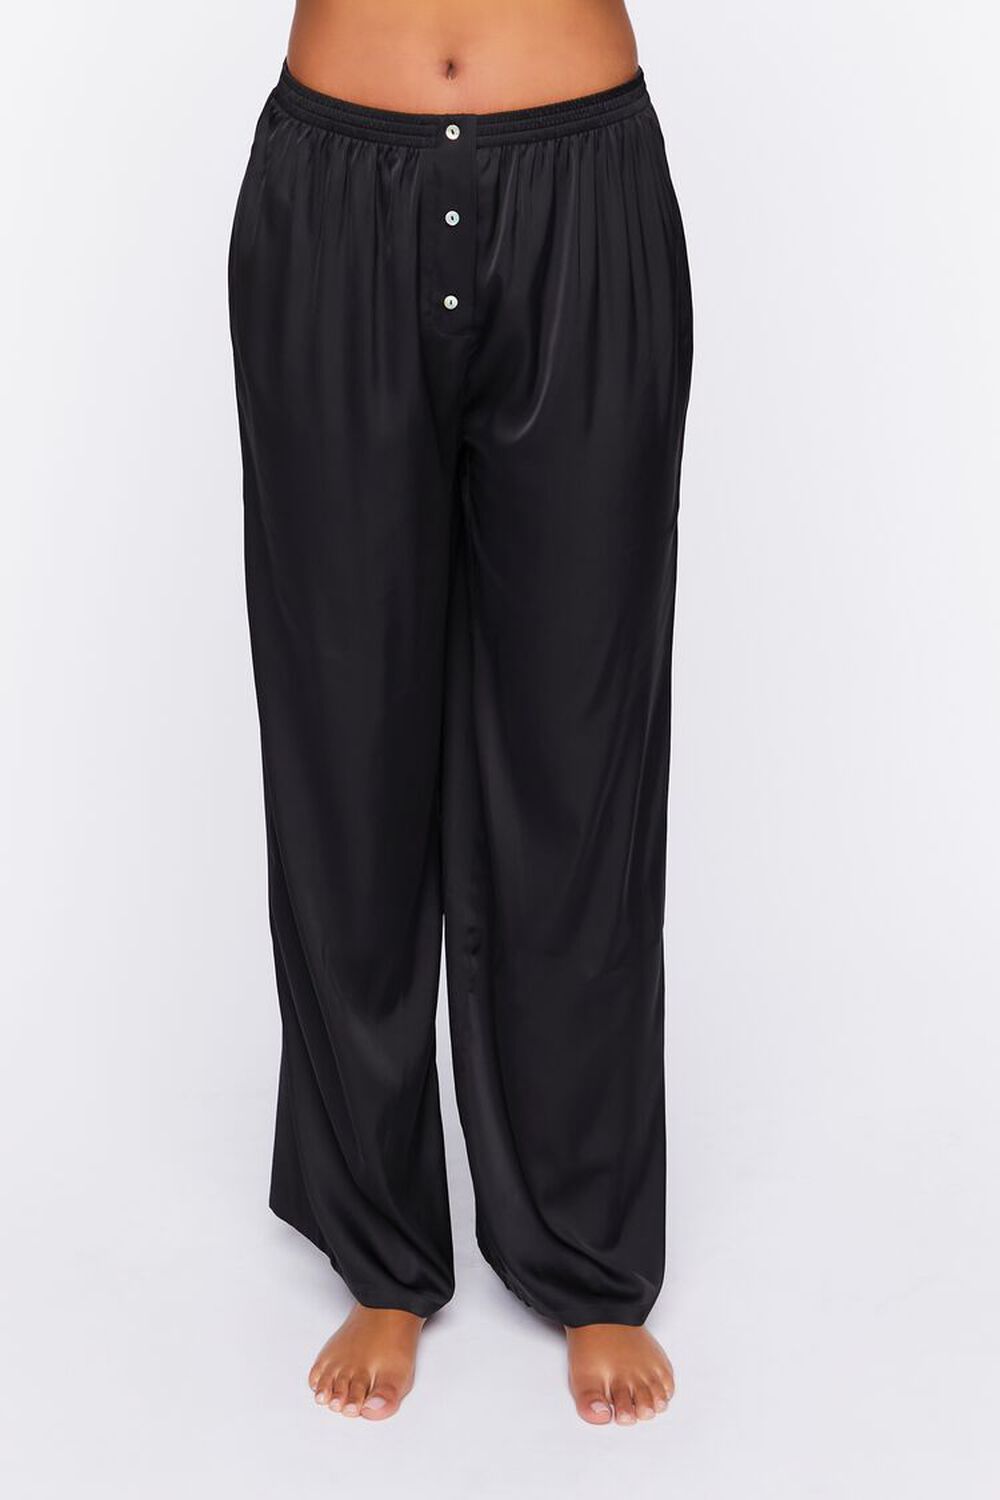 Women's Satin Pajama Pants - Colsie™ Black XS